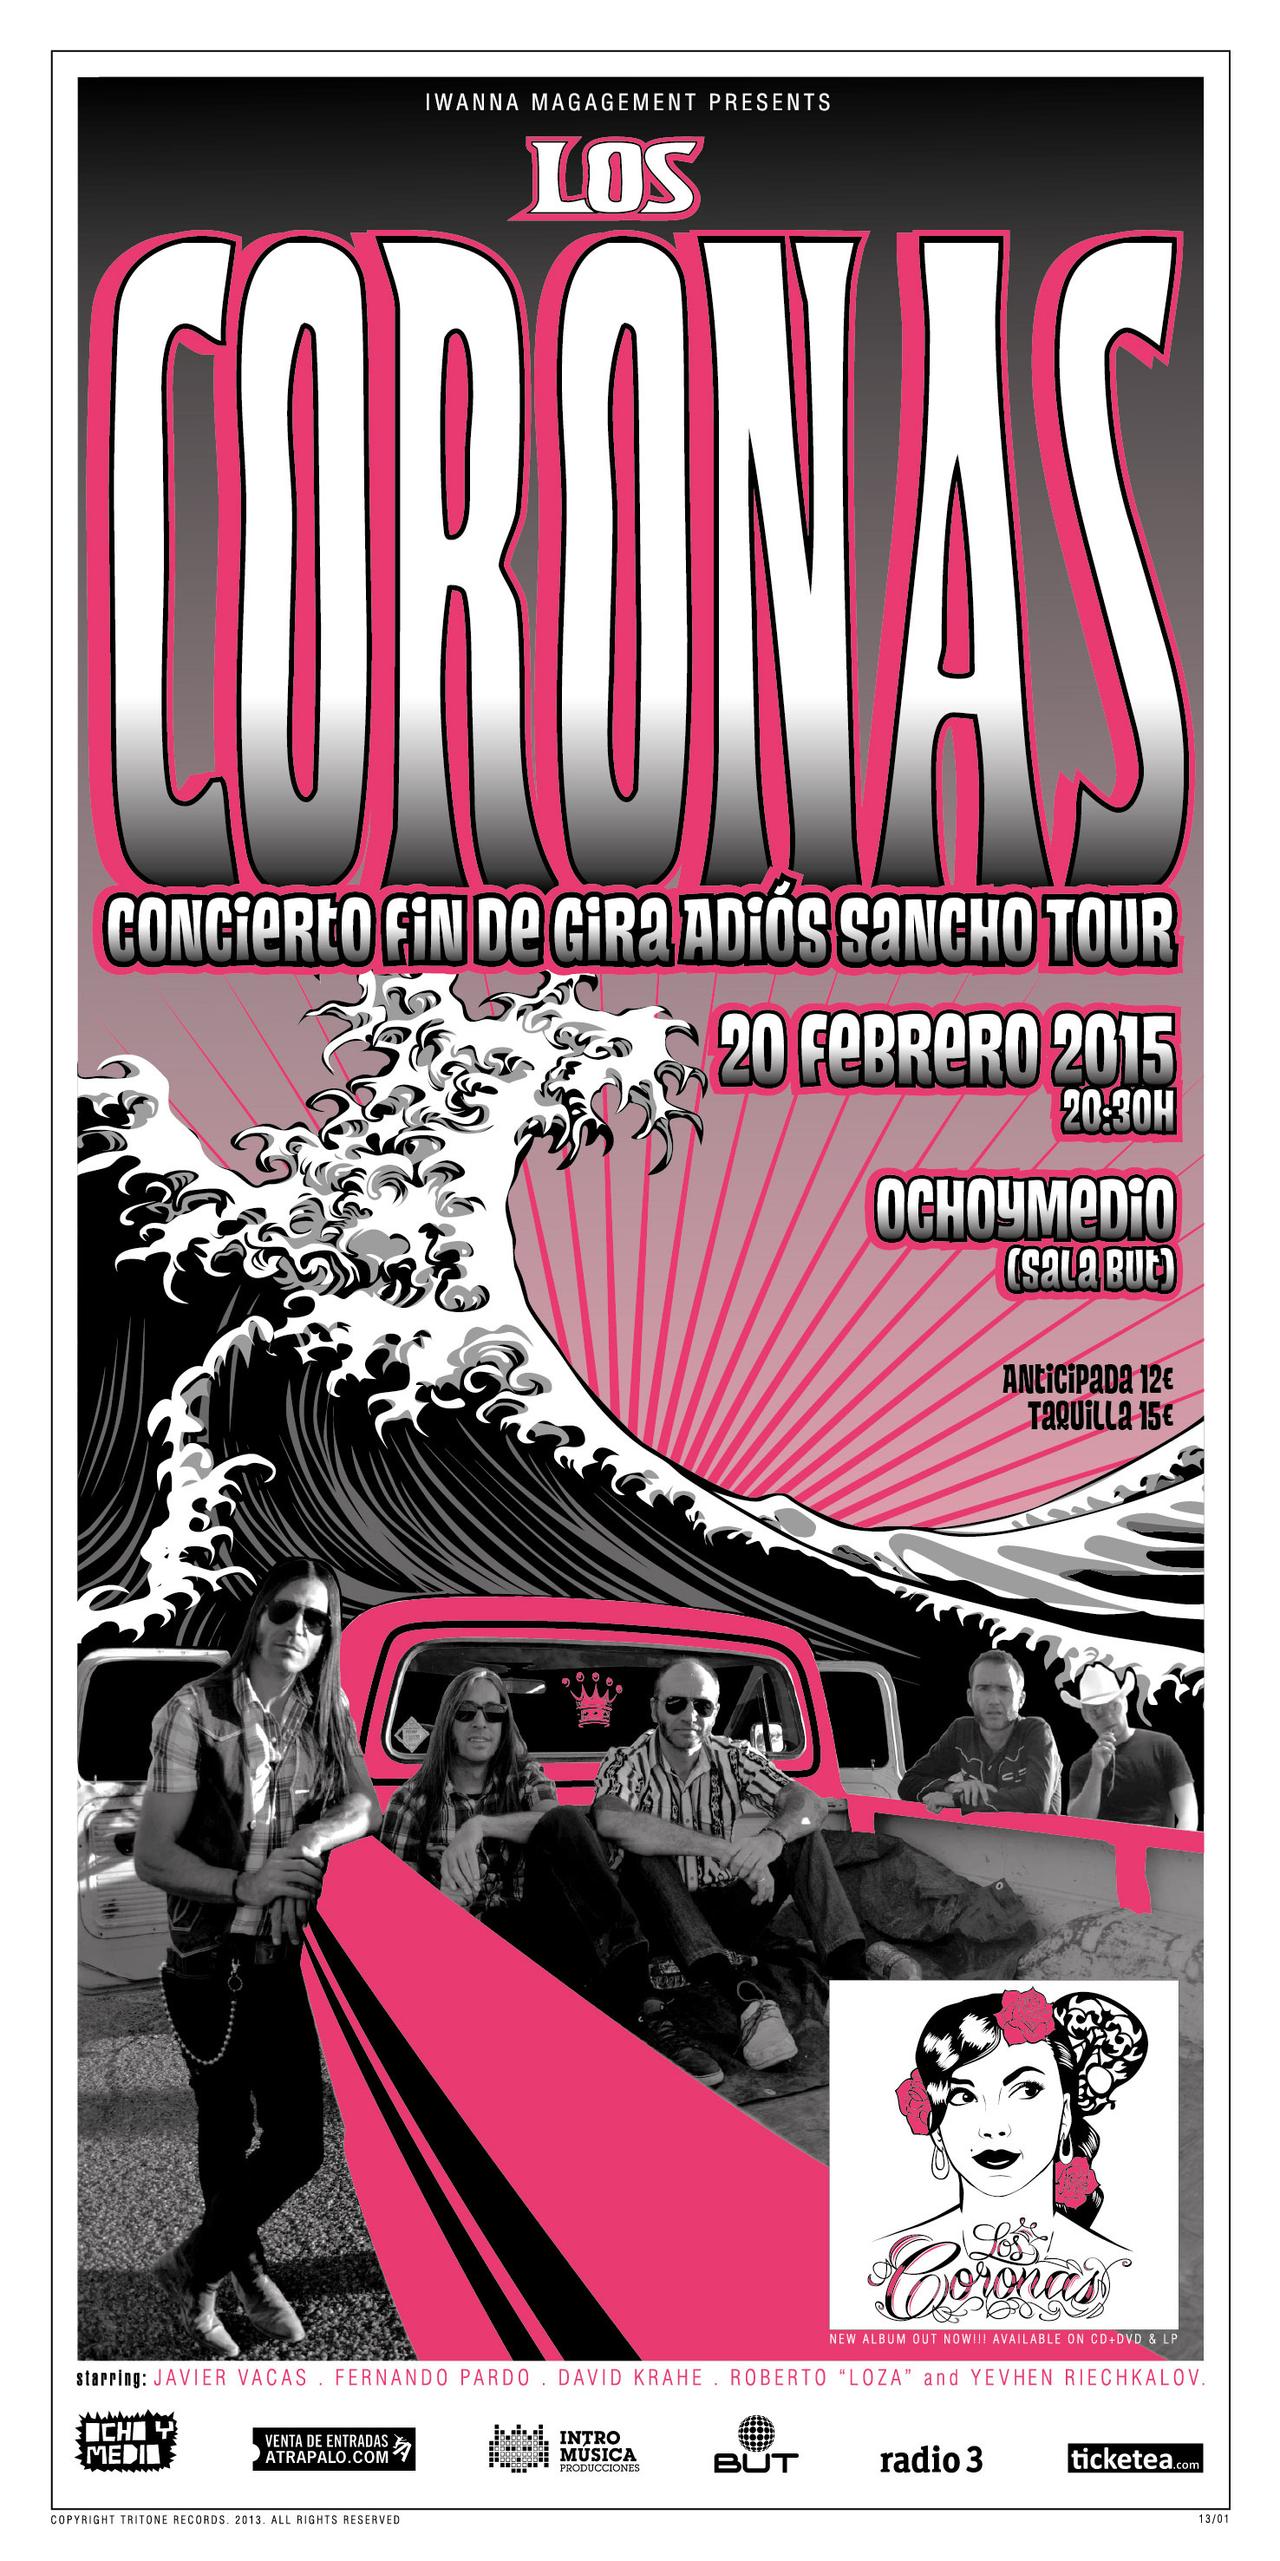 Los Coronas - Fin de gira, en Madrid